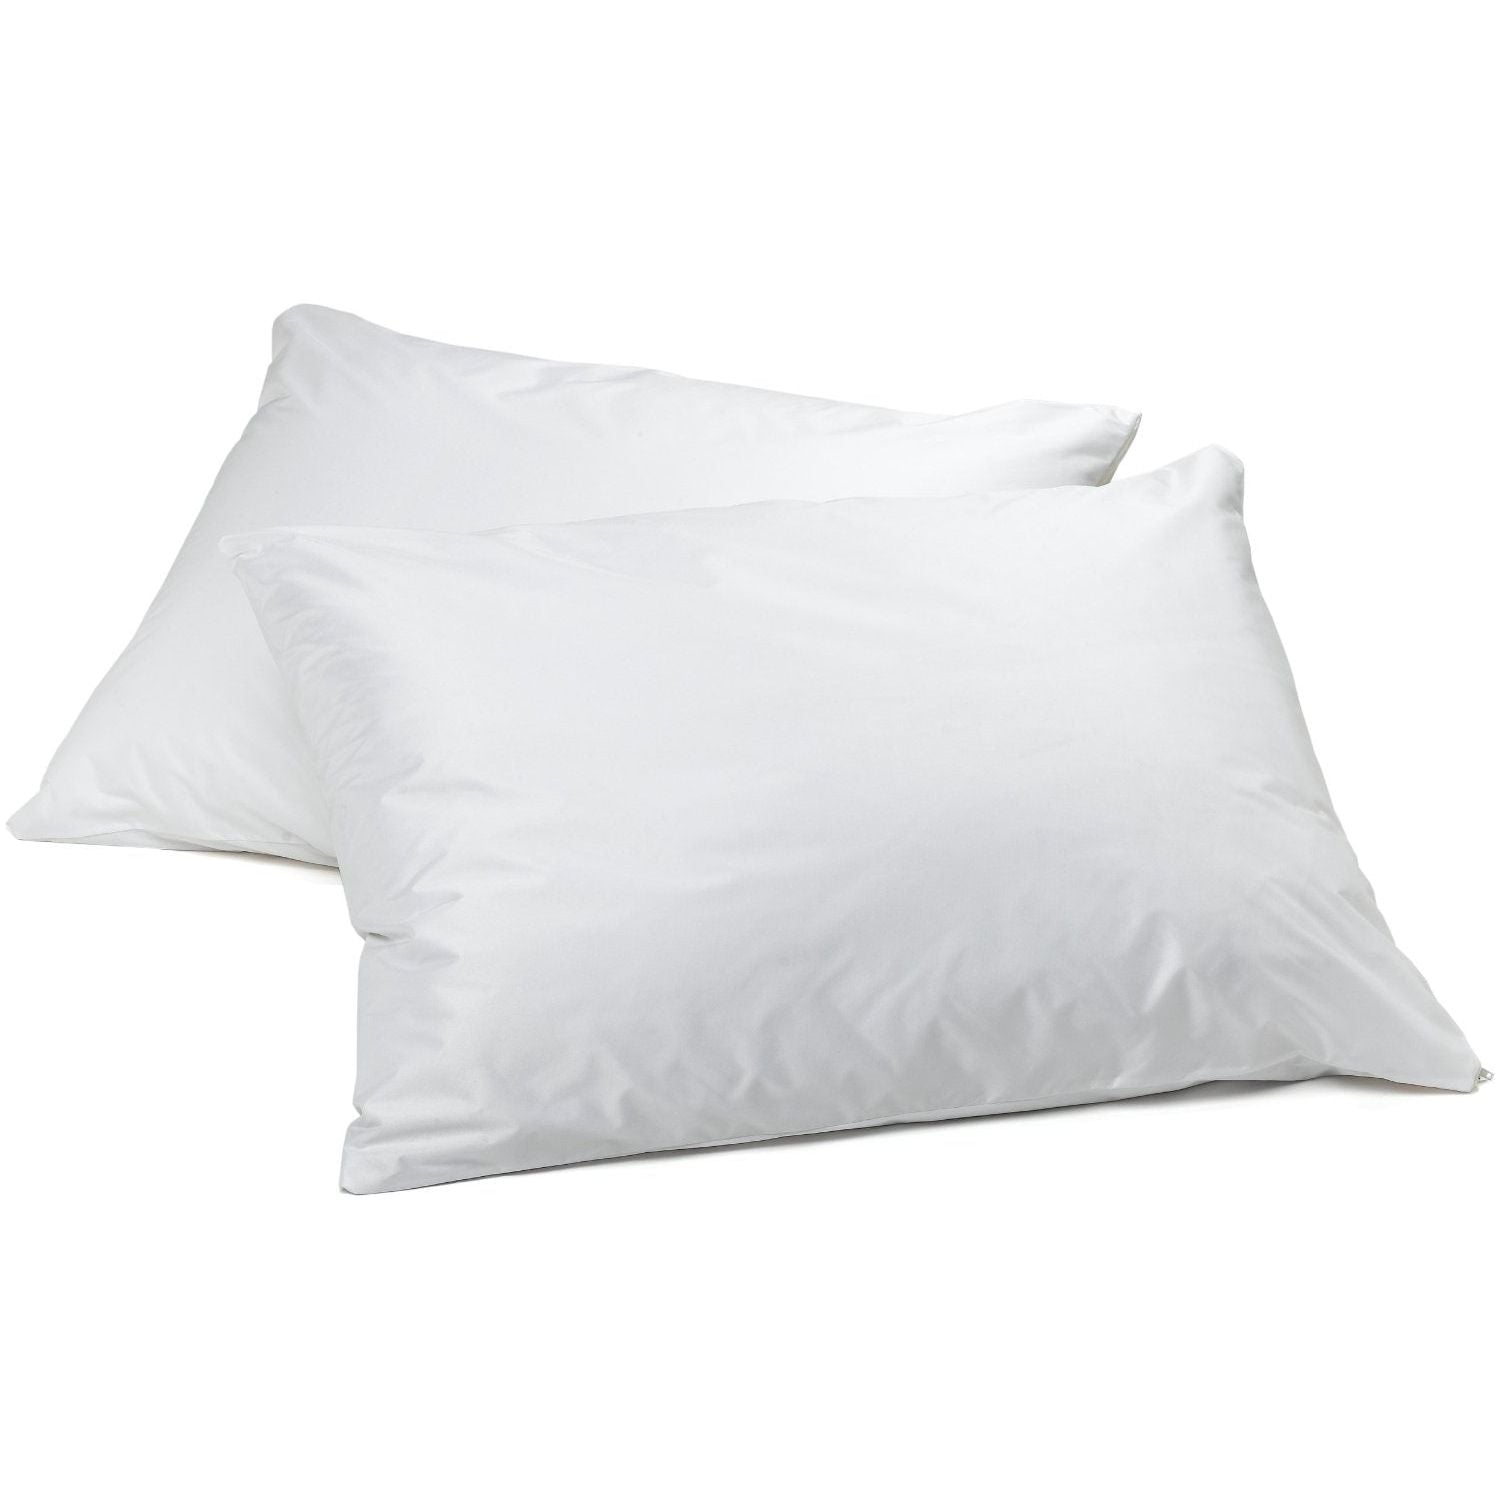 Waterproof Pillowcase Protector